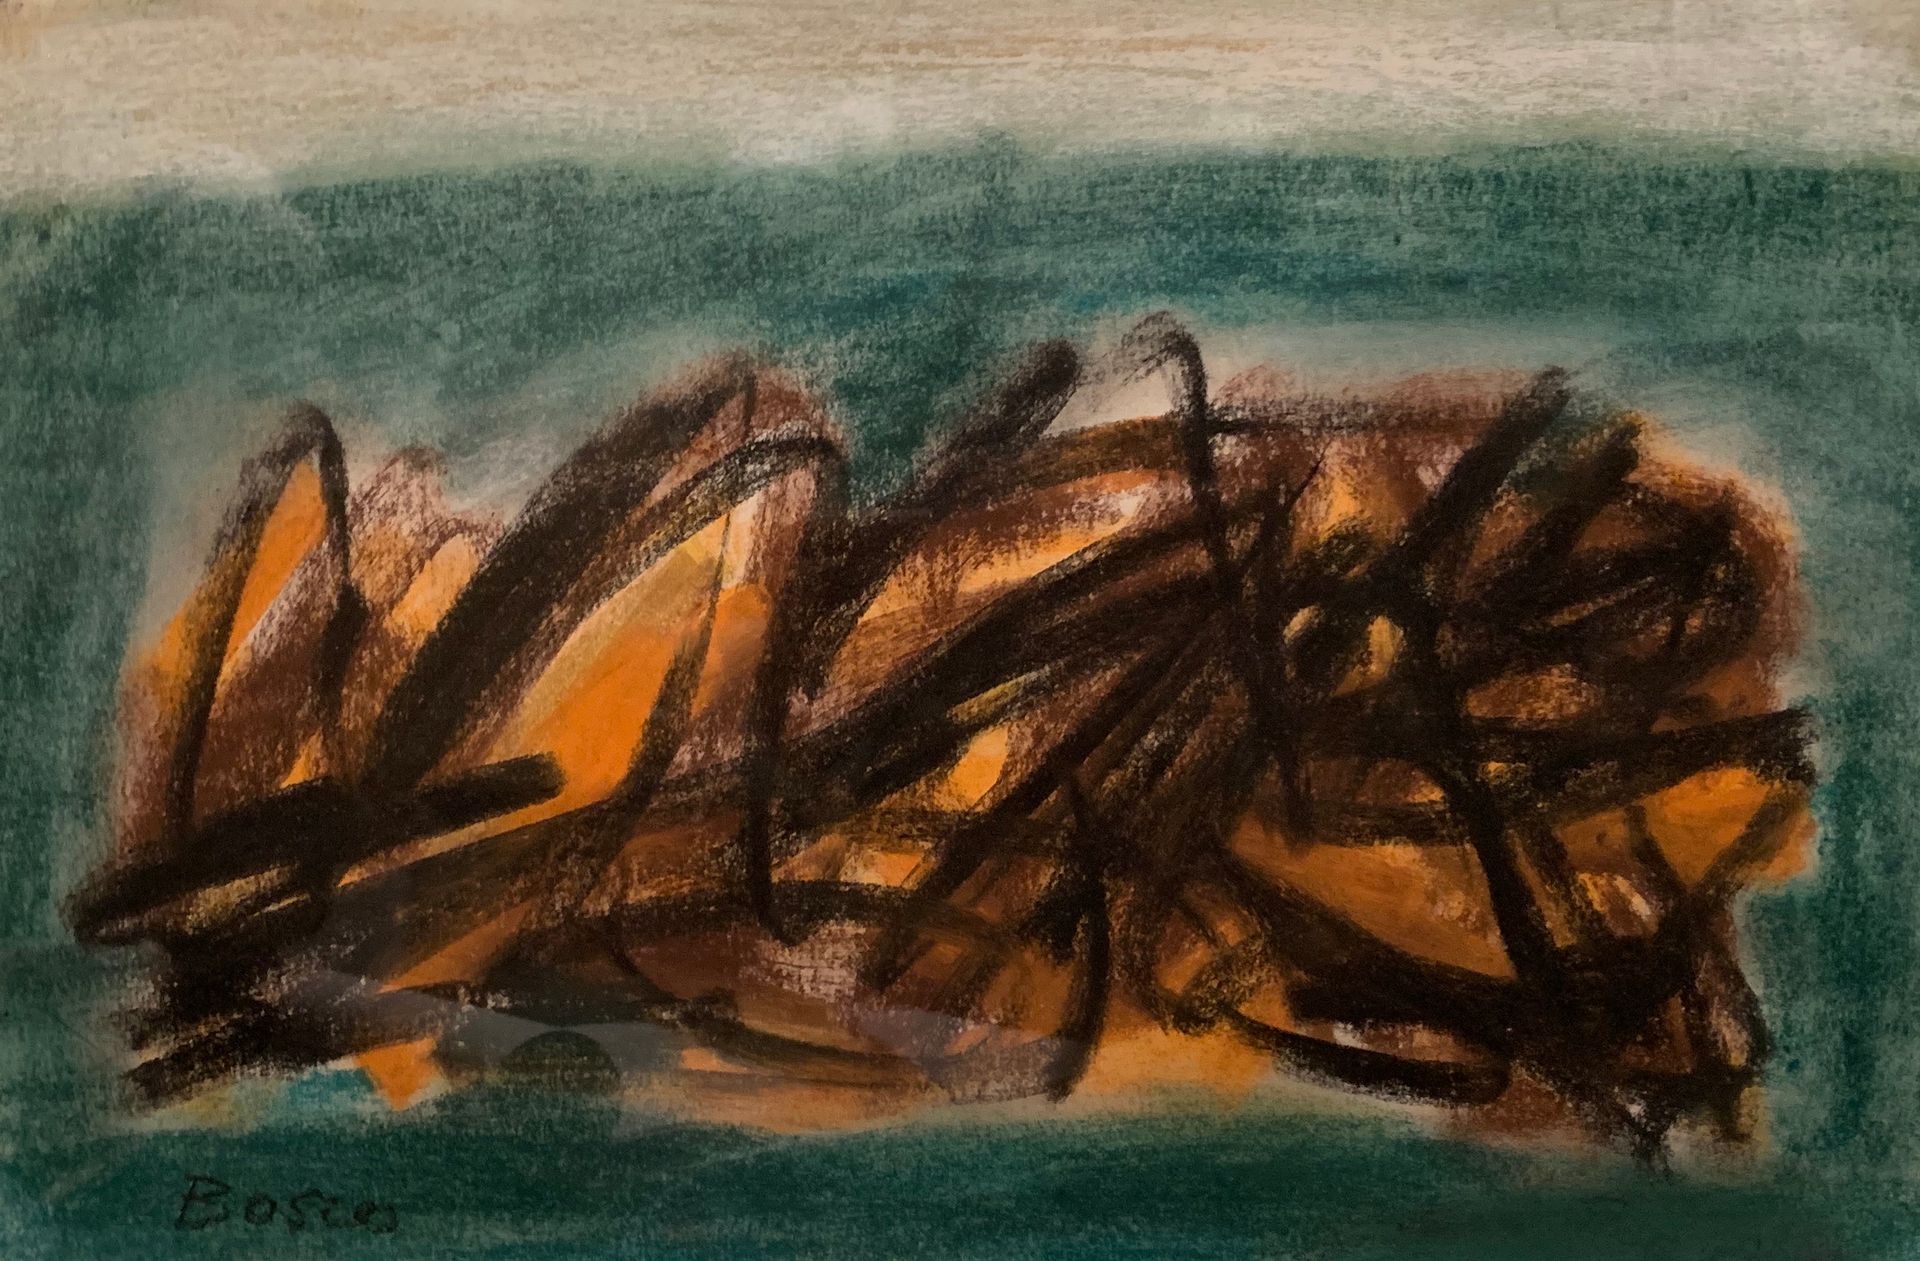 Null 皮埃尔-博斯克 (1909-1993)

绿色、黑色和橙色的抽象画

右下角有签名的粉彩画

27 x 41 厘米